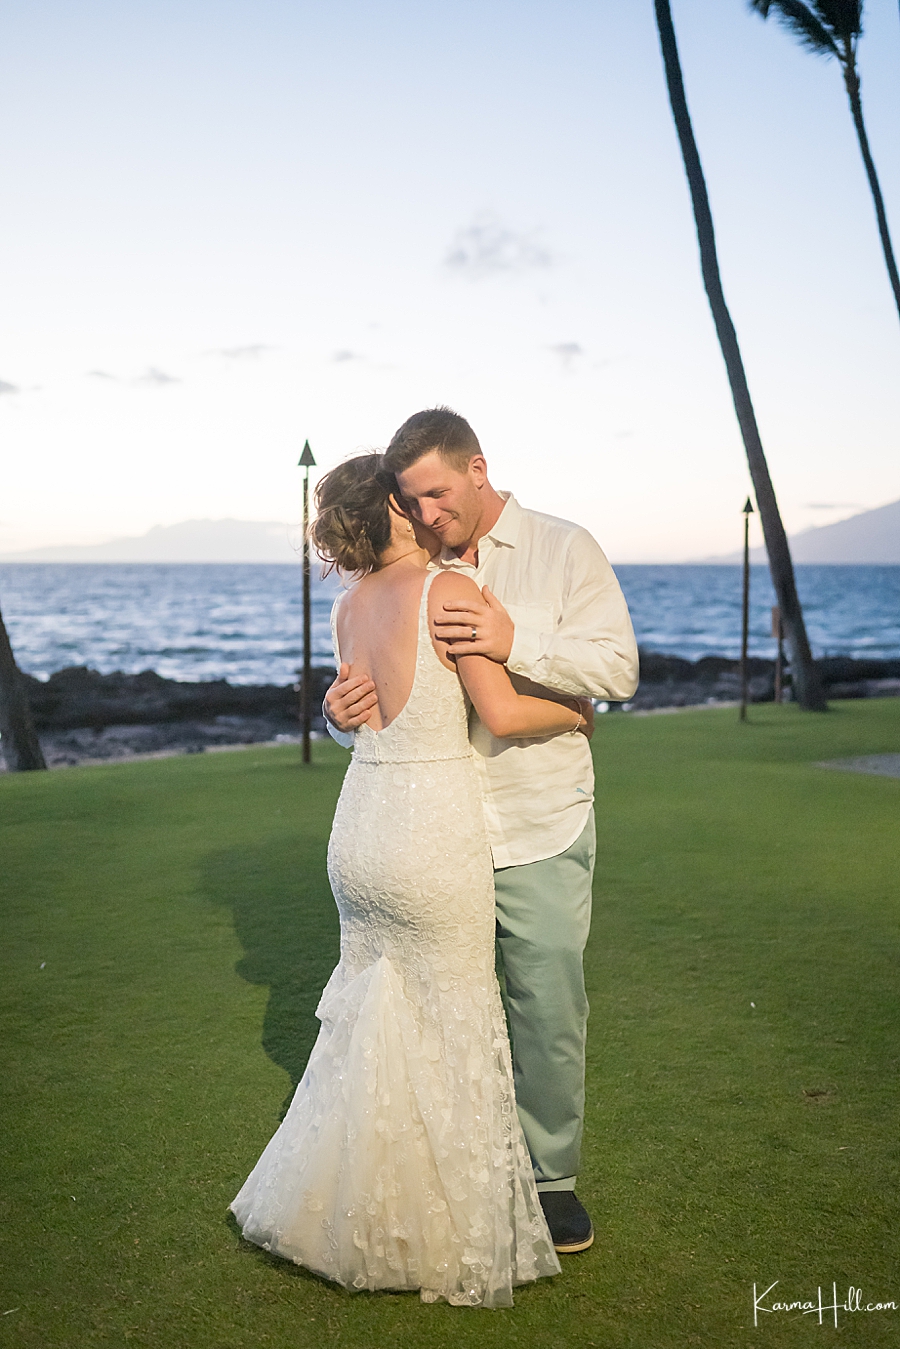 Maui wedding venues
